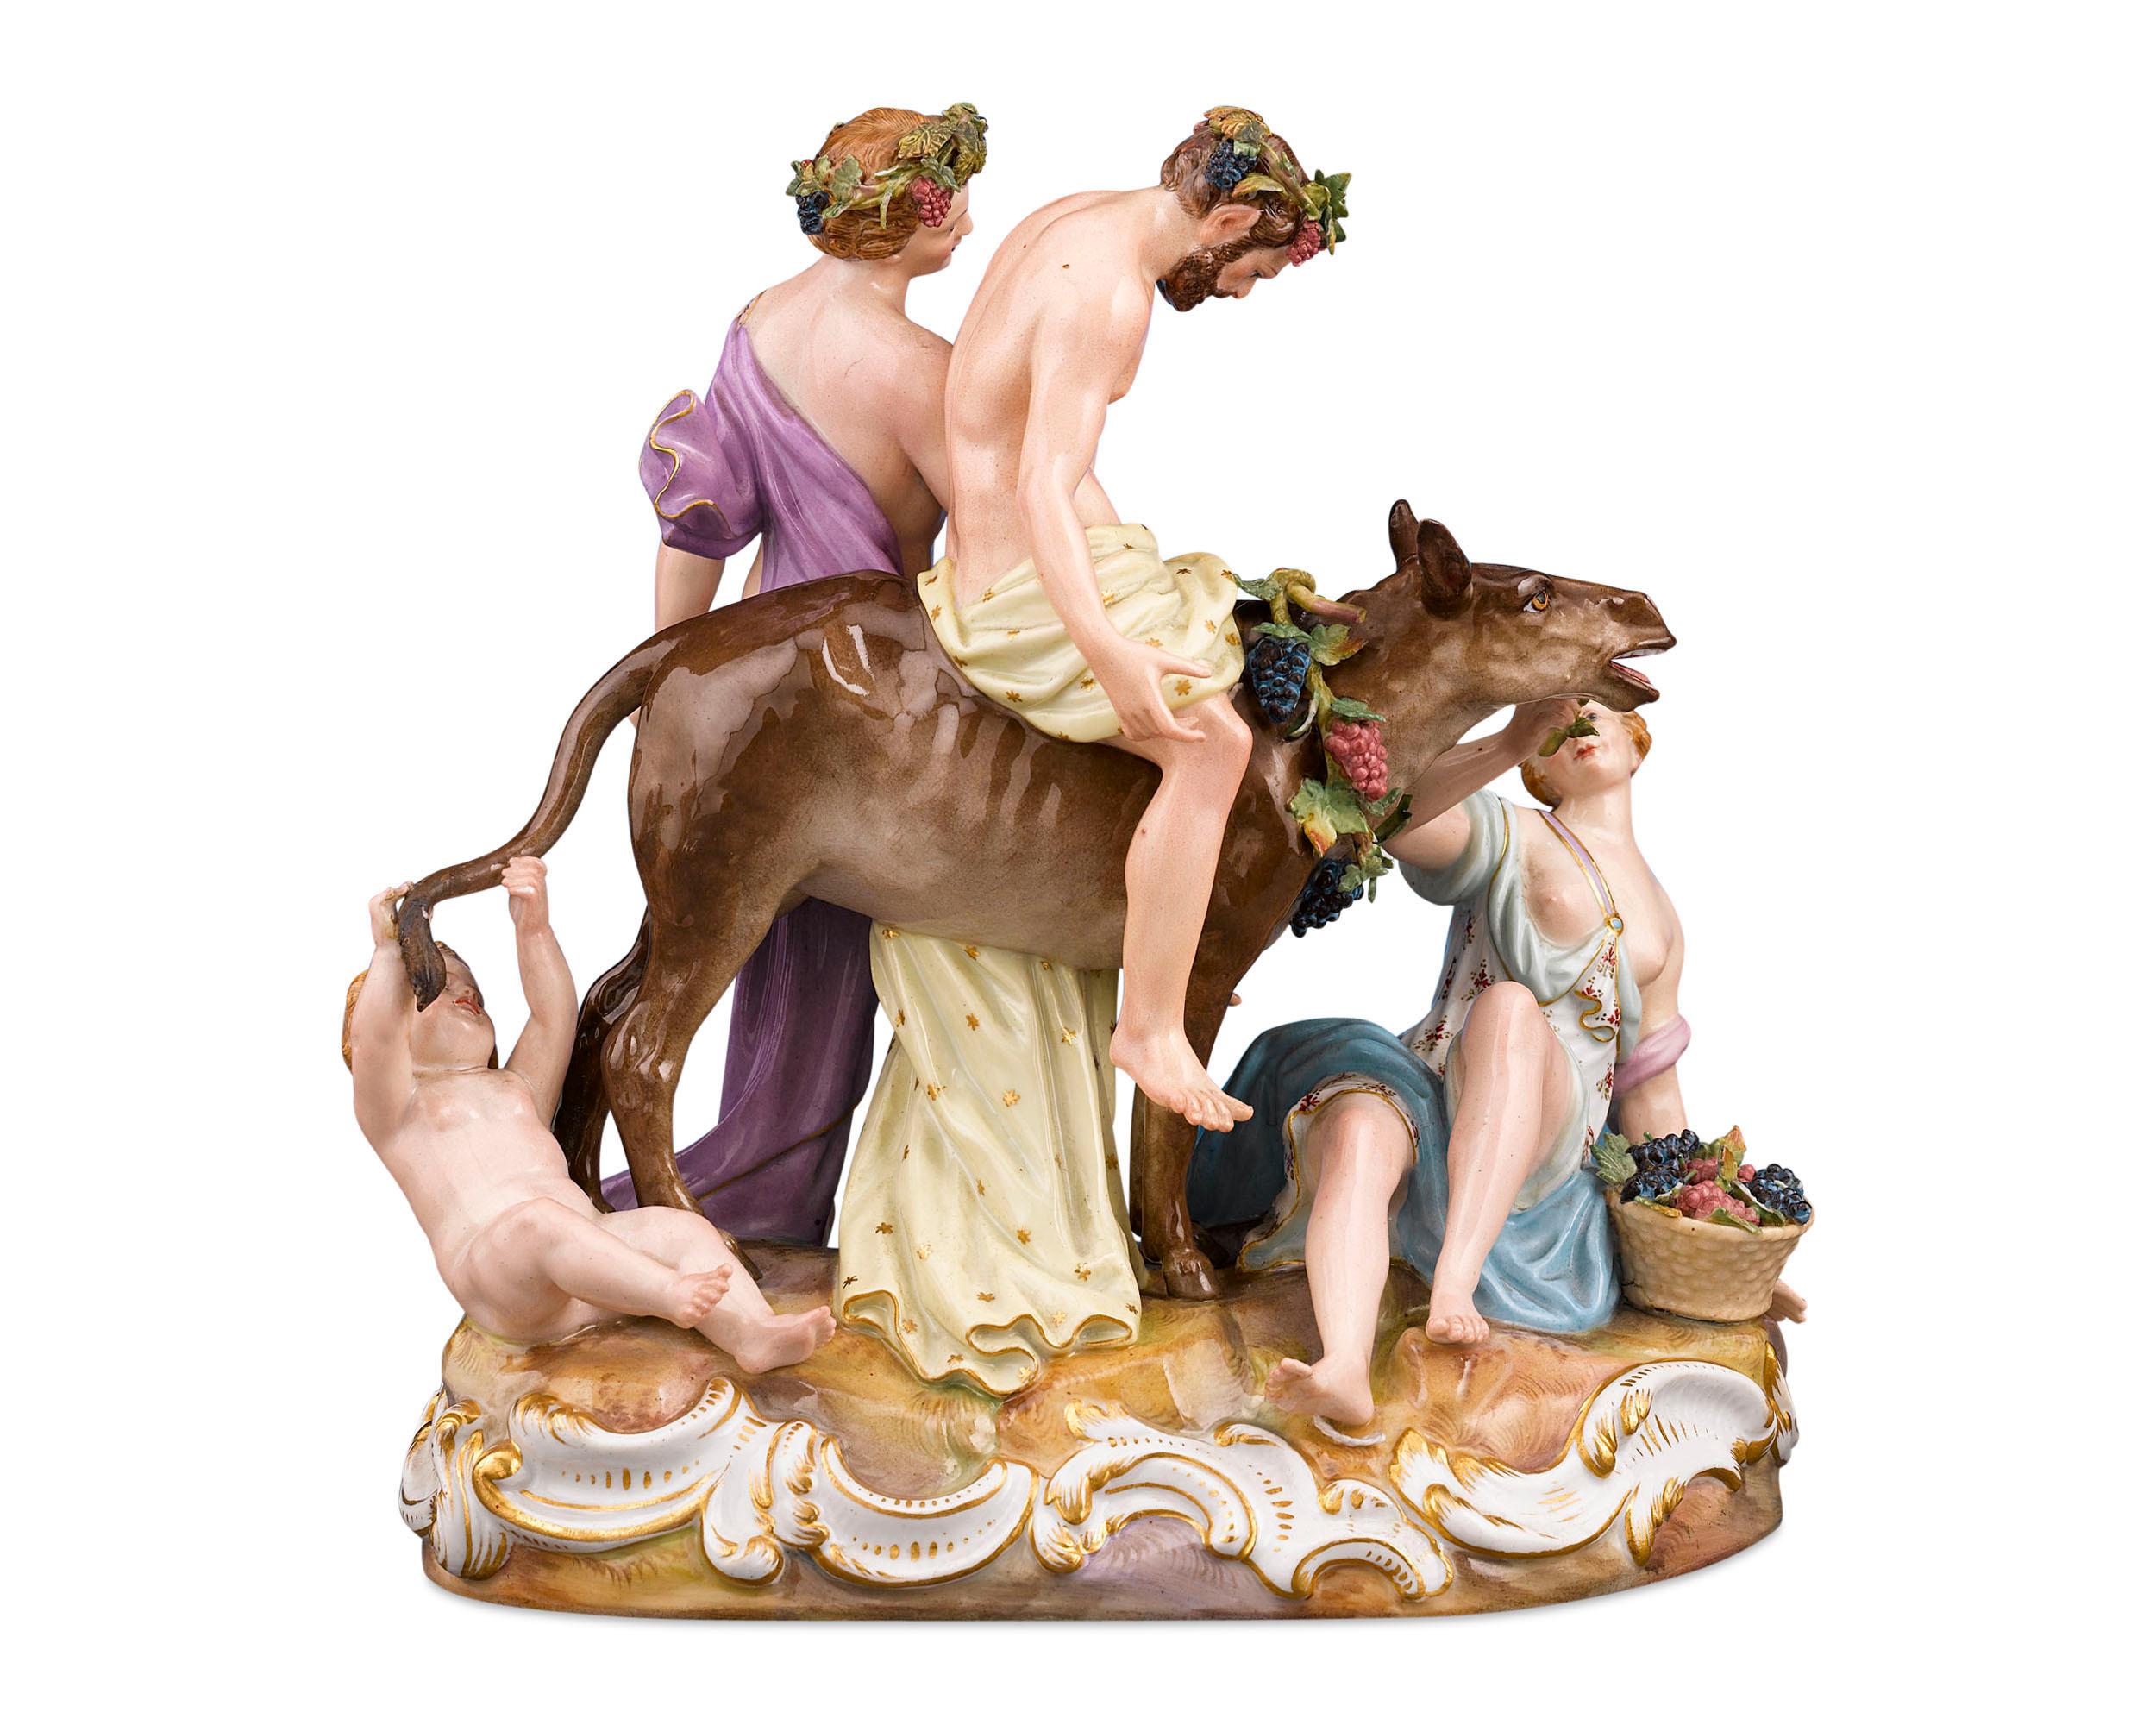 German Mythological Group by Meissen